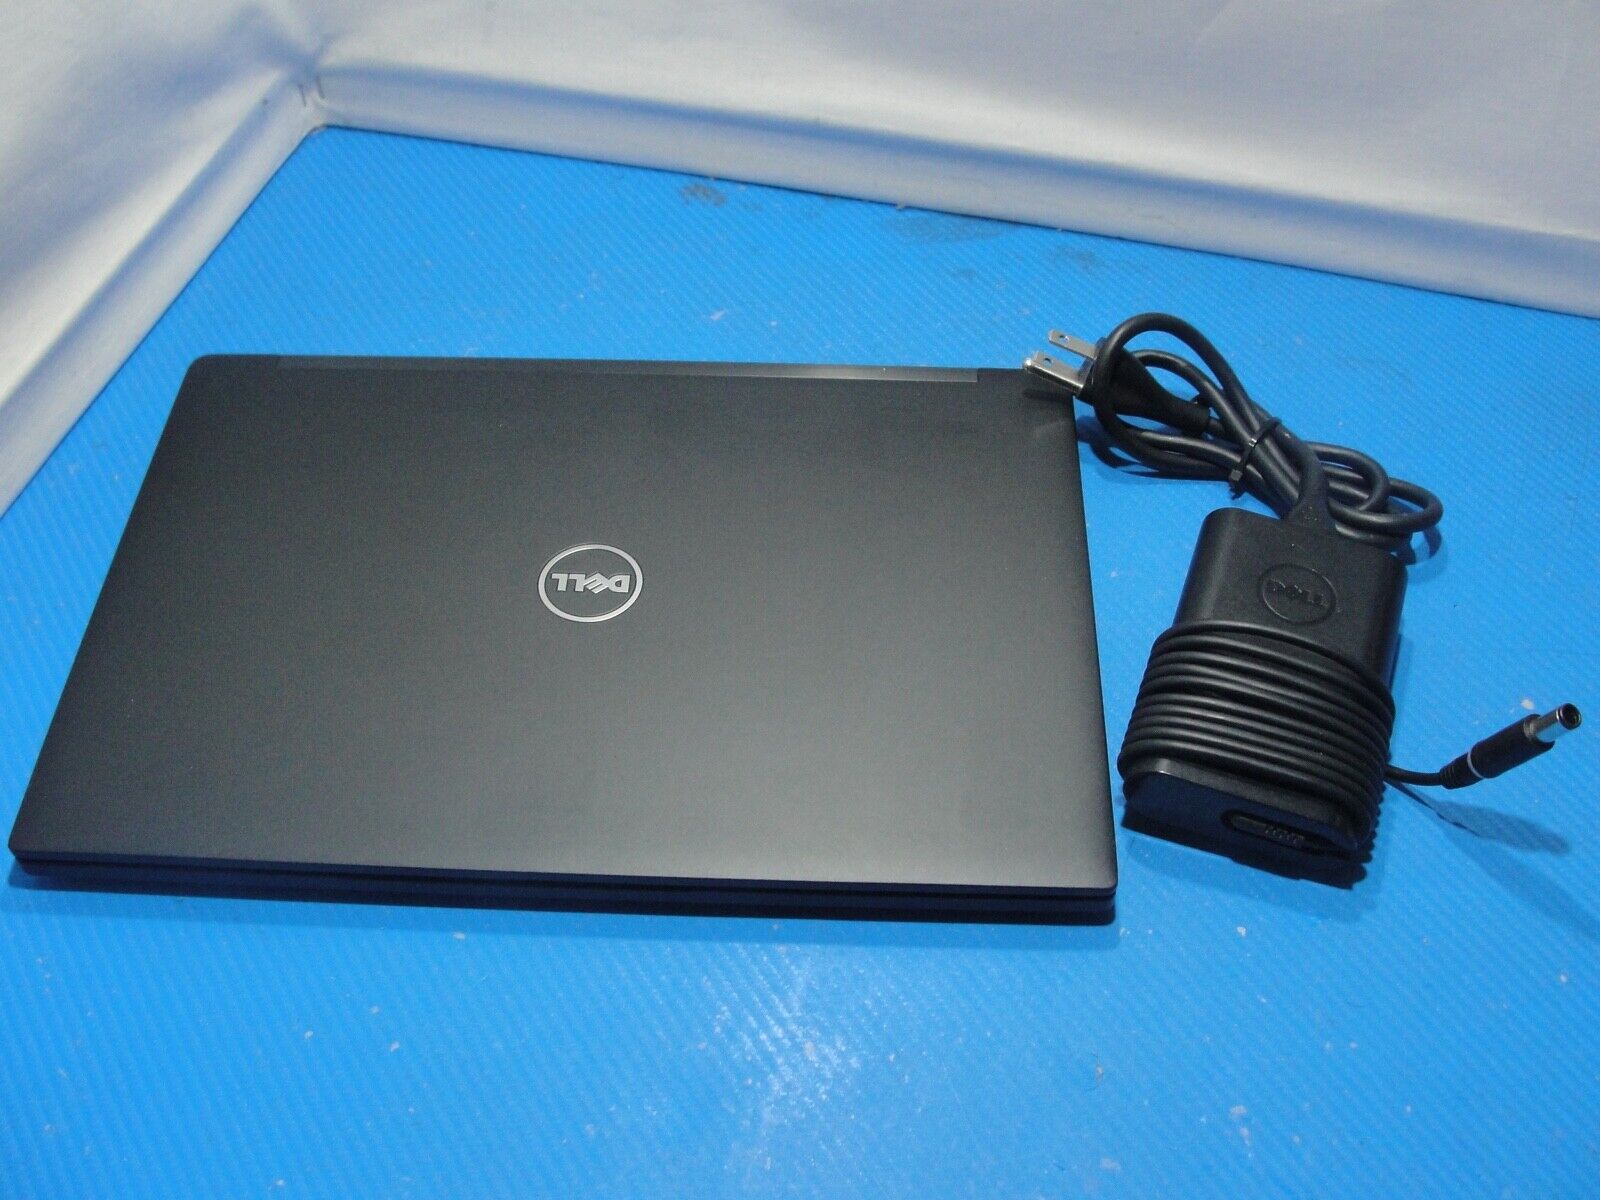 Dell Latitude 7280 i5-7300u 2.6GHz 8GB 256GB SSD Backlight KB - Working Good